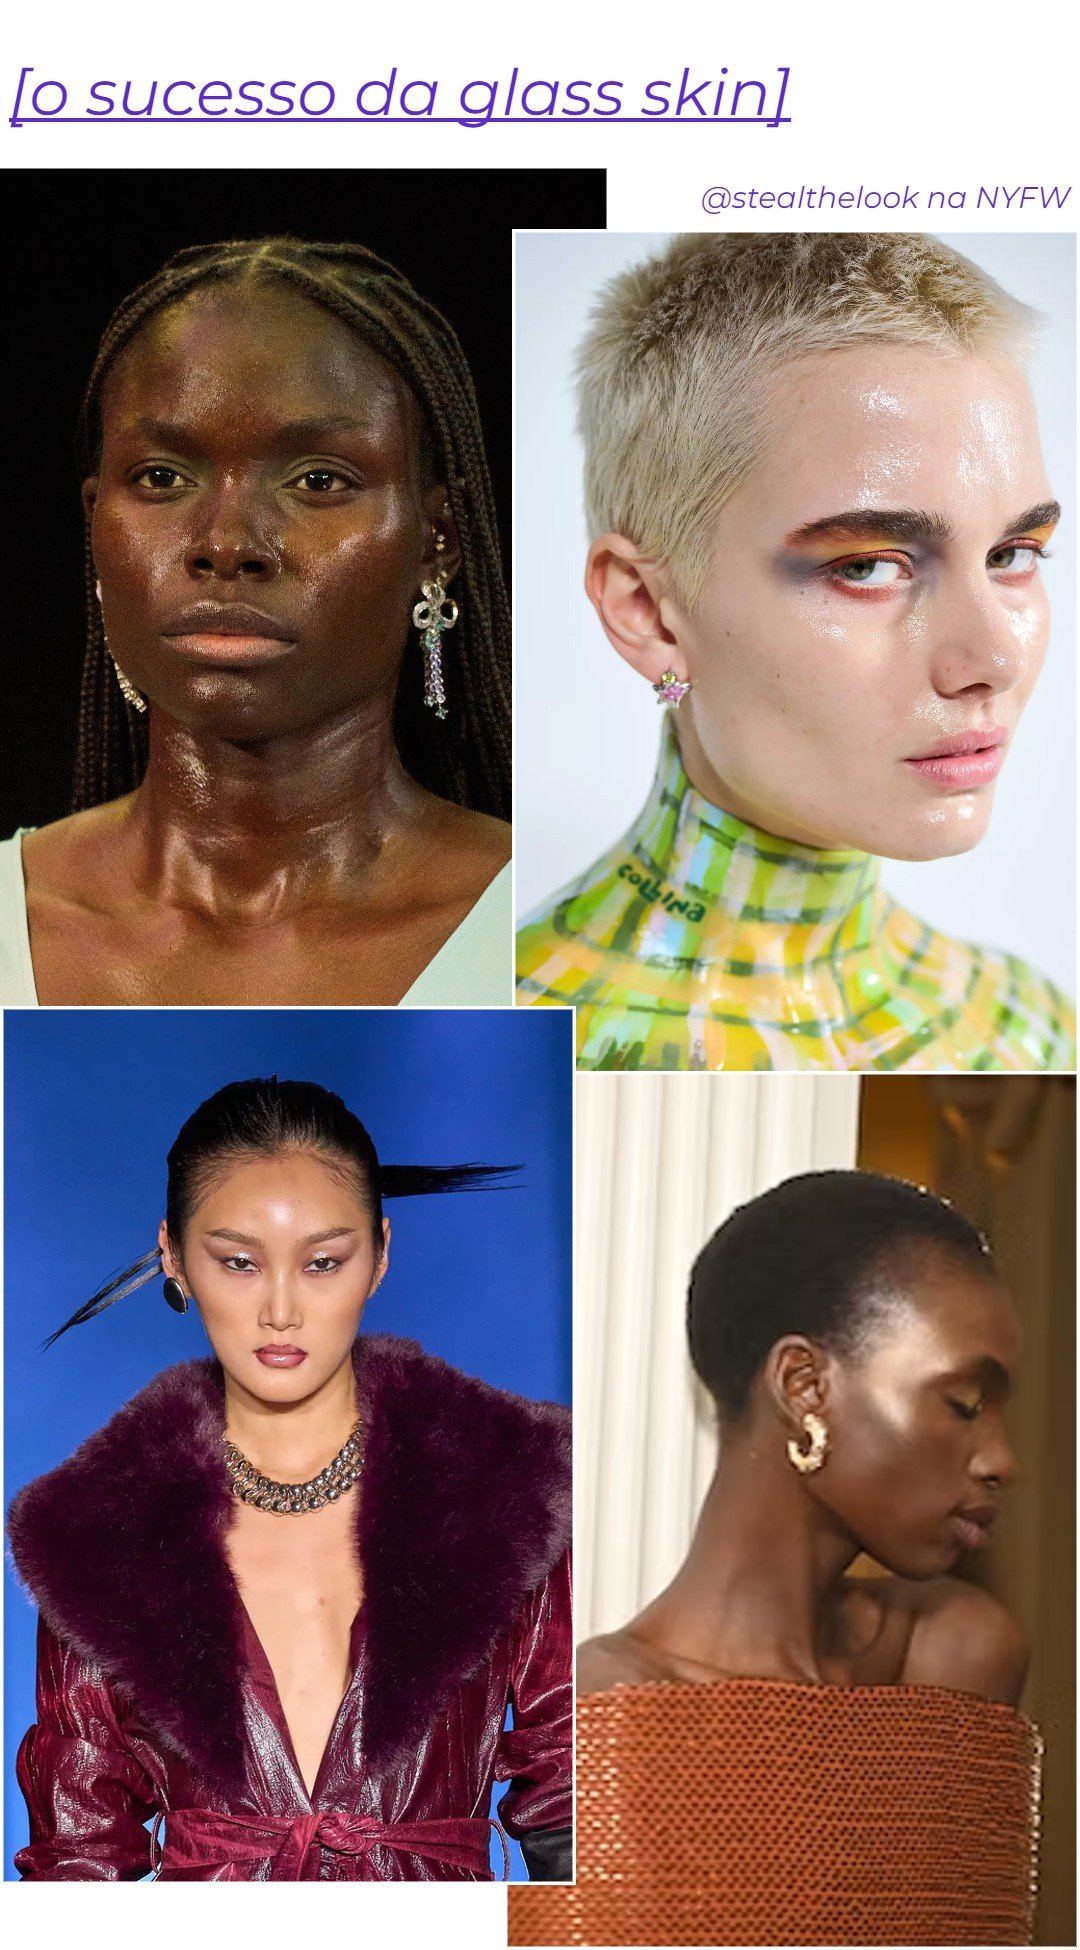 Collina Strada, Kim Shui, Christian Siriano e Puma - nyfw - tendências de beleza - semana de moda - brasil - https://stealthelook.com.br